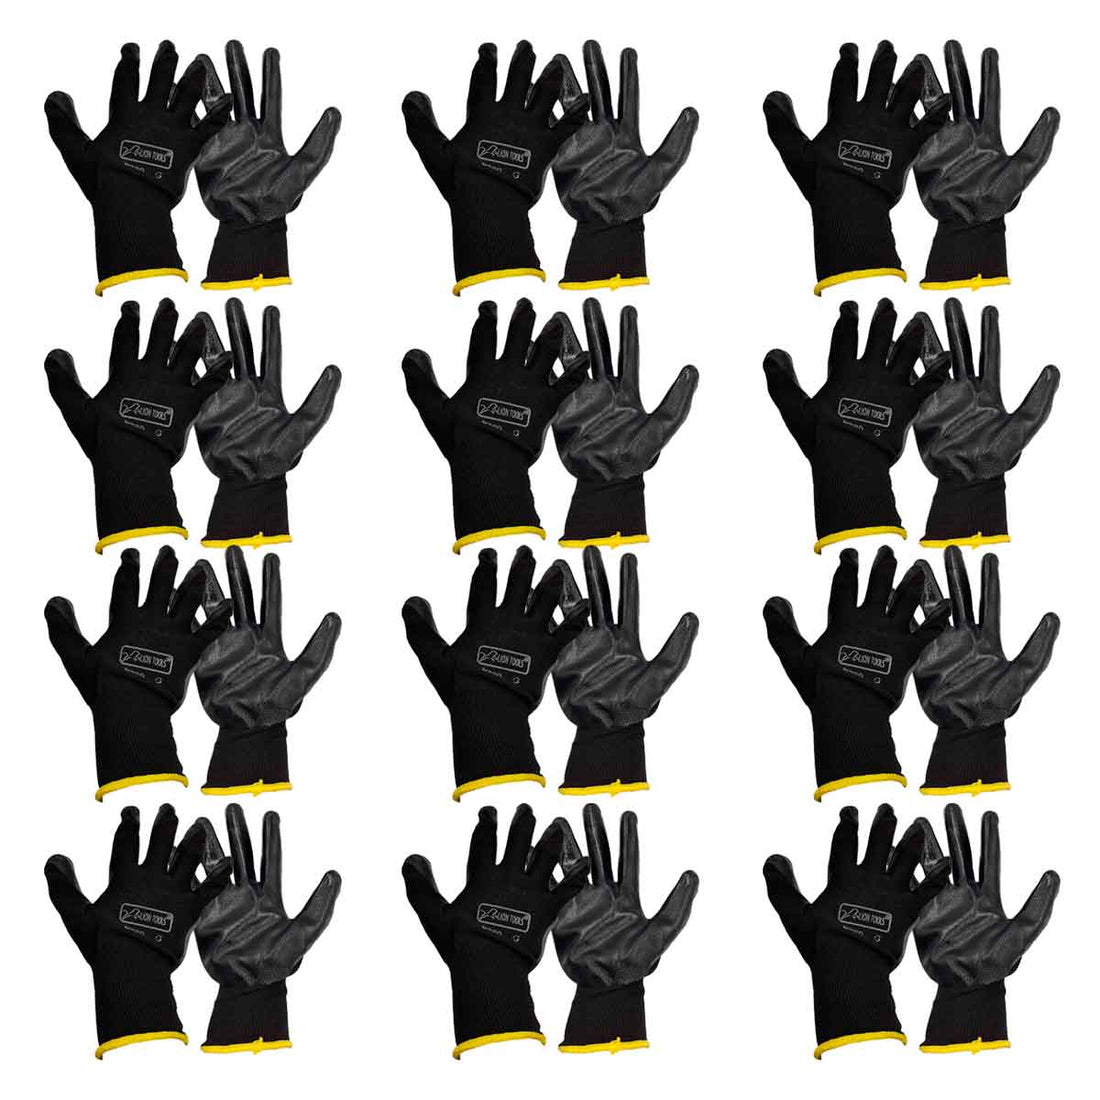 12 pares guantes negros nitrilo trabajo rudo mecanico